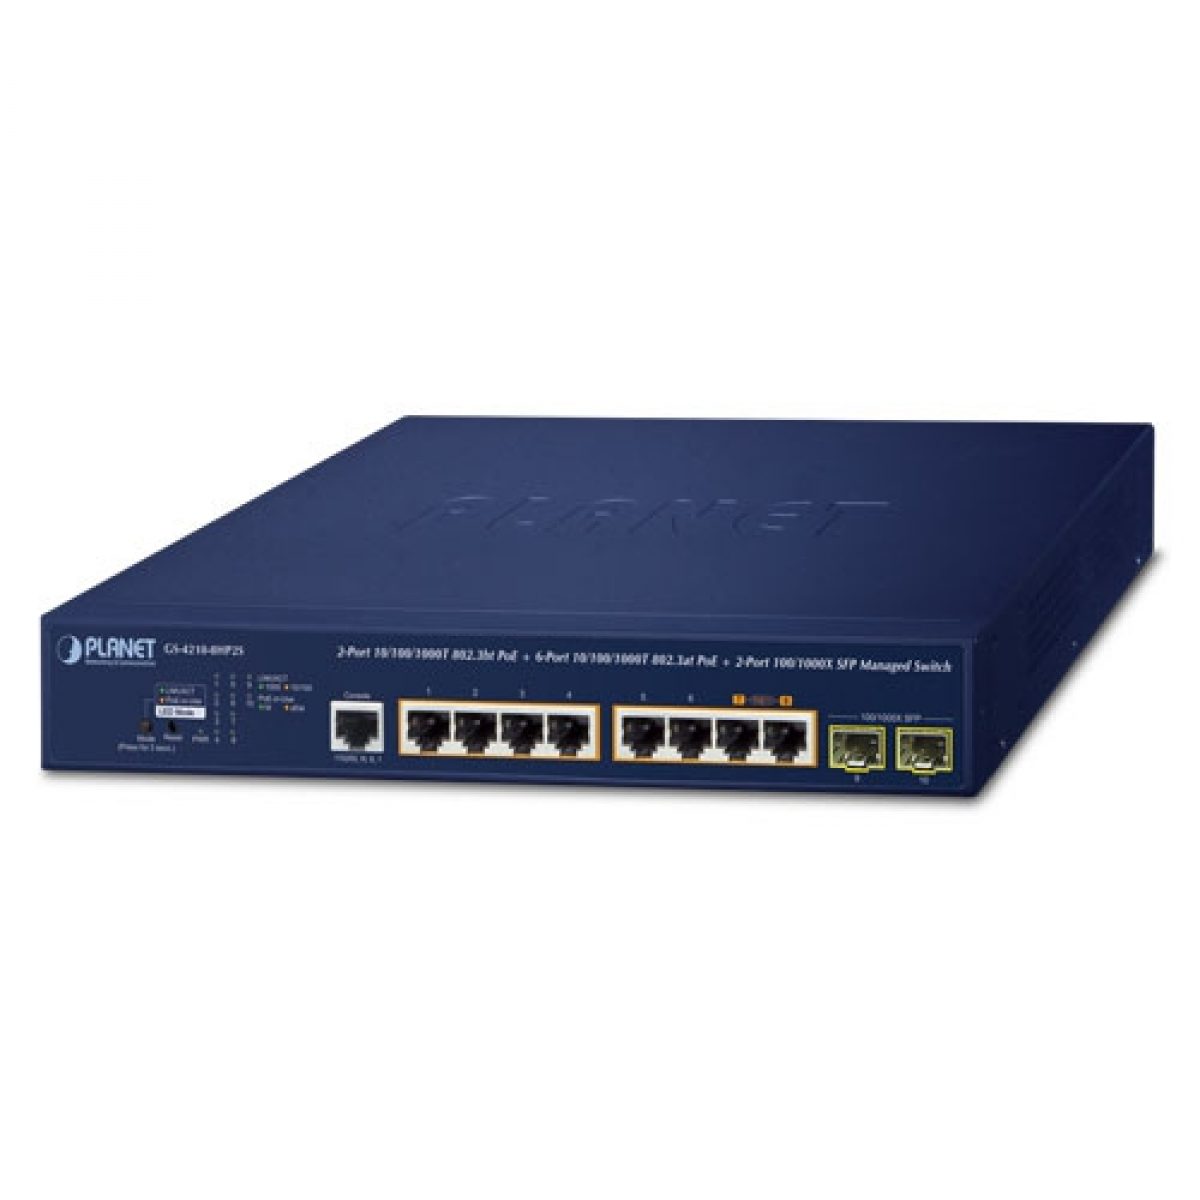 RB10-802S-PSE 8x 100M/1G/2.5G Ethernet port switch + 2x 1G/10G SFP+ uplink  slots, high power PoE+ 125W budget